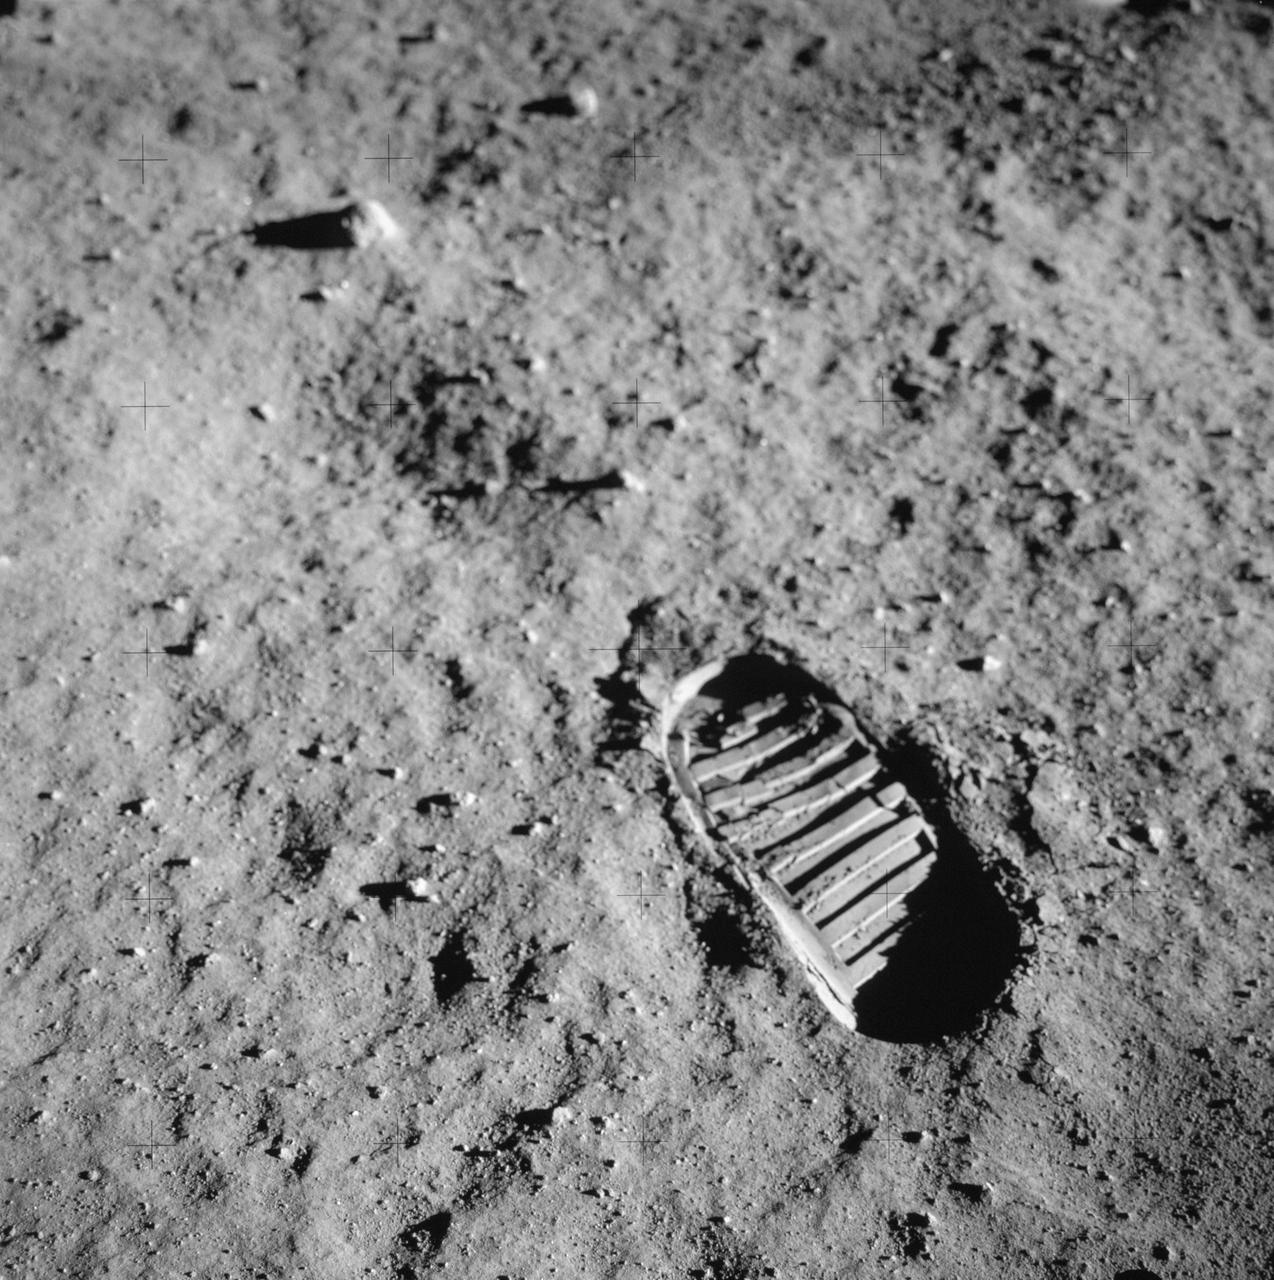 Photograph of close-up of astronaut footprint in lunar soil